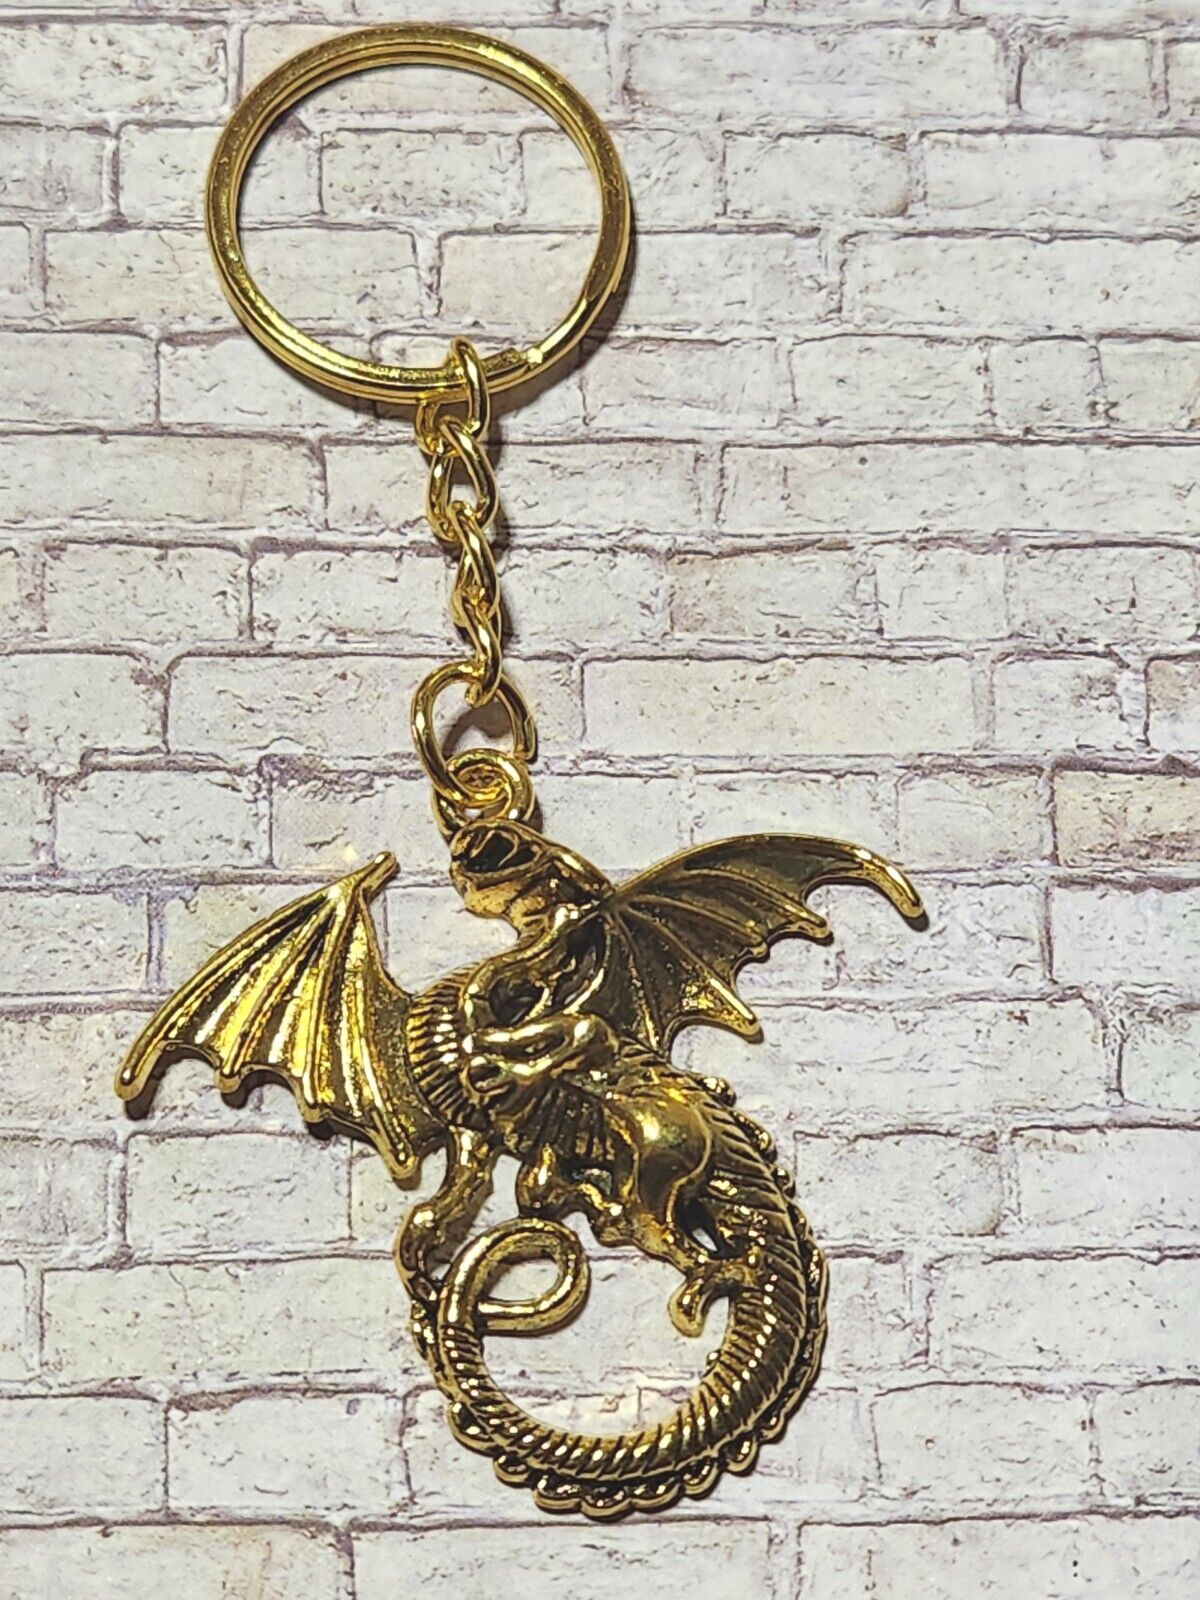 Stunning Dragon Keychain Gold-Colored Medium Keychain